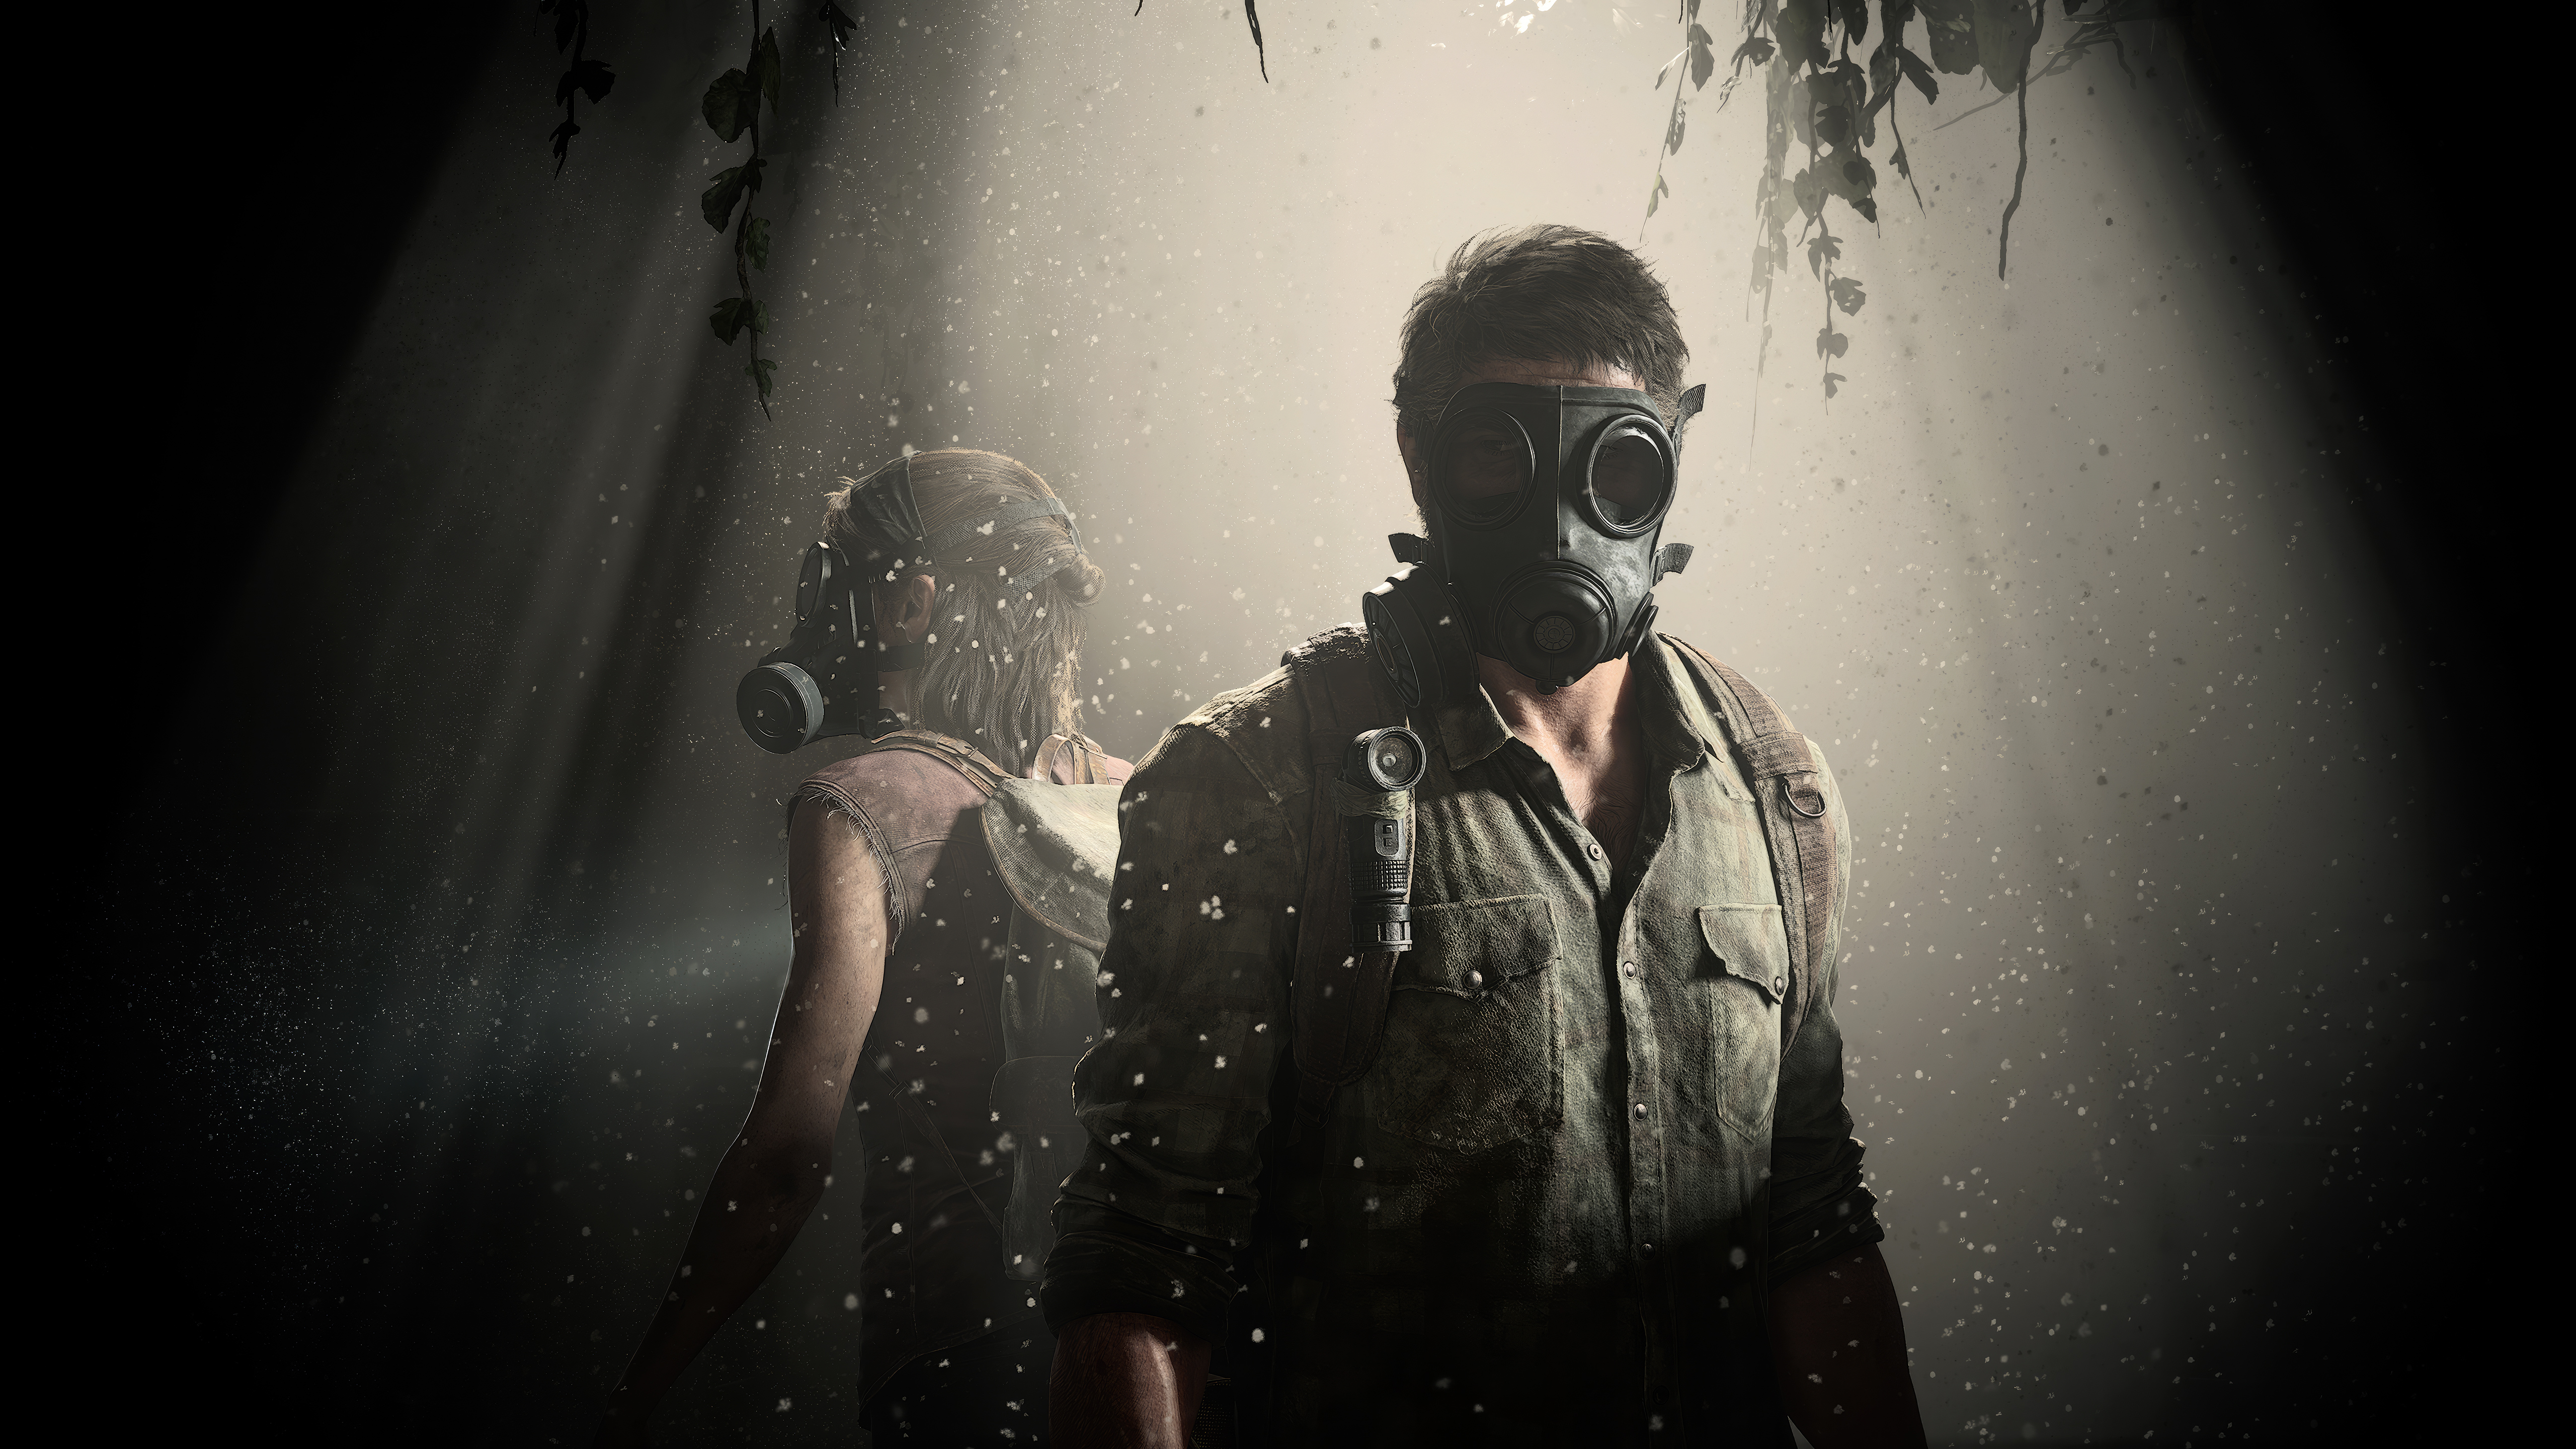 Ellie And Joel In The Last Of Us Part 1 Wallpaper,HD Games